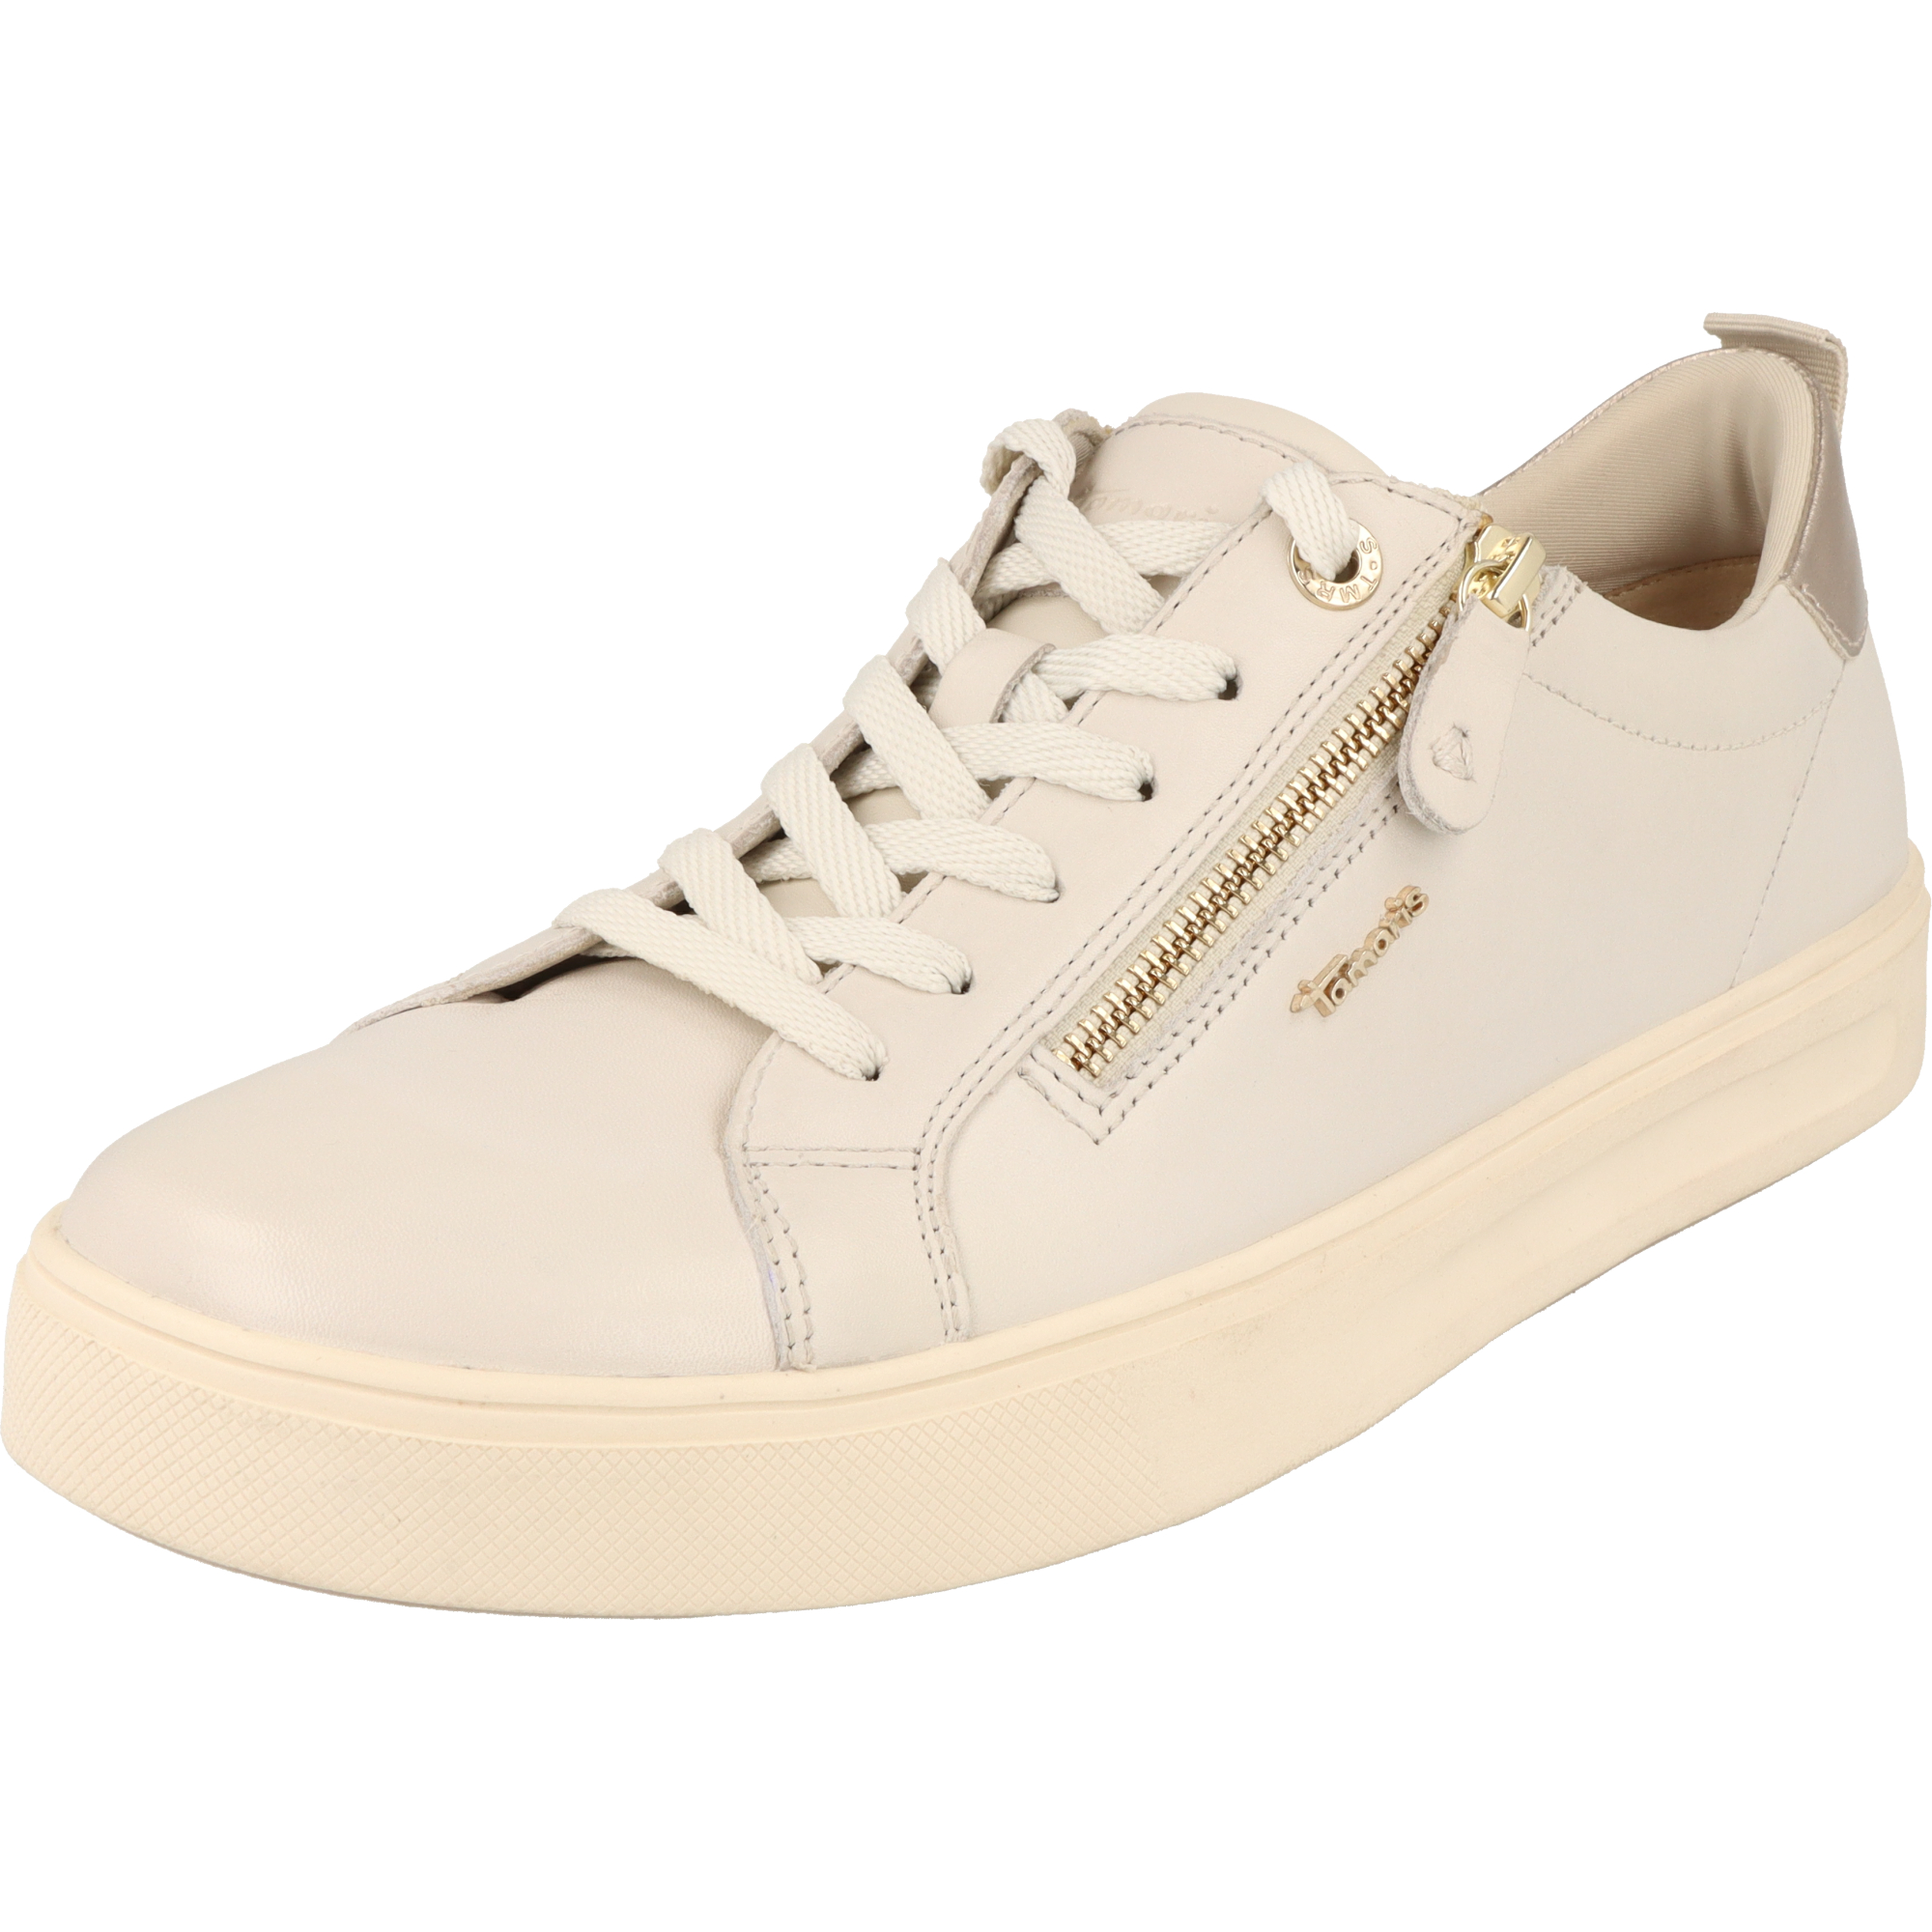 Tamaris Damen Schuhe stylische Leder Comfort Fit Sneaker 8-53707-42 Offwhite